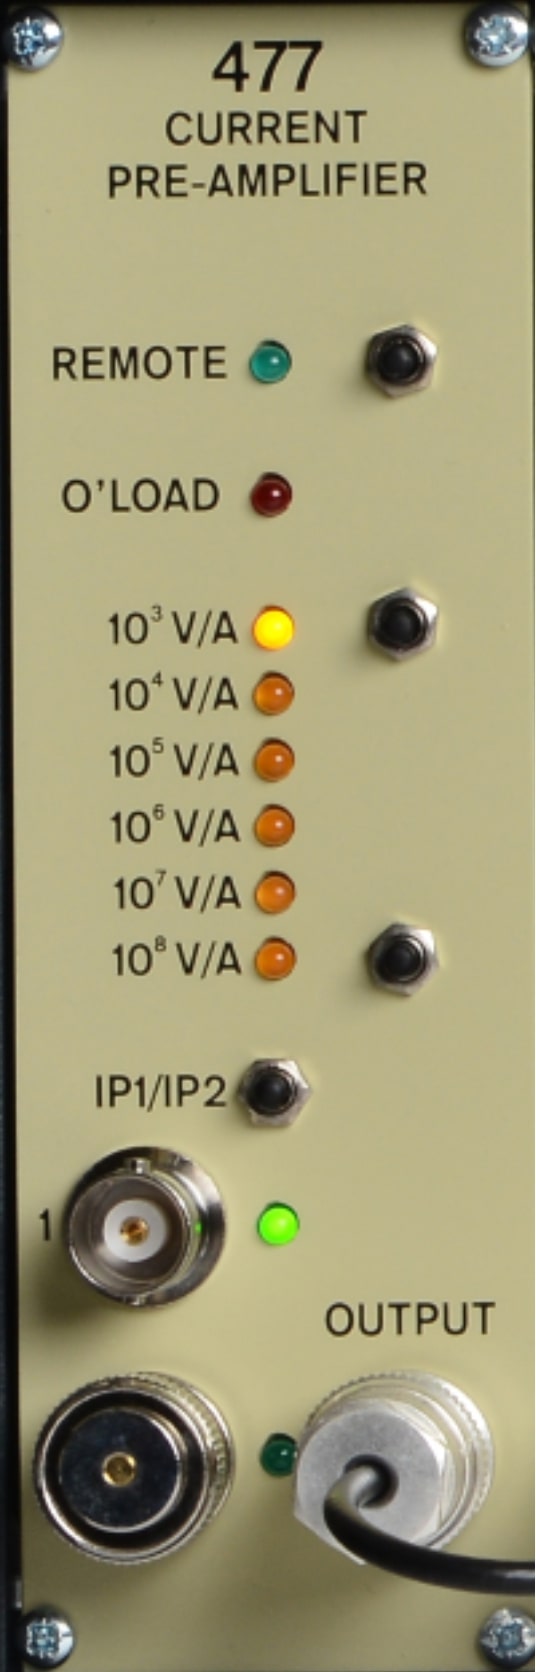 477 AC Current Pre-amplifier